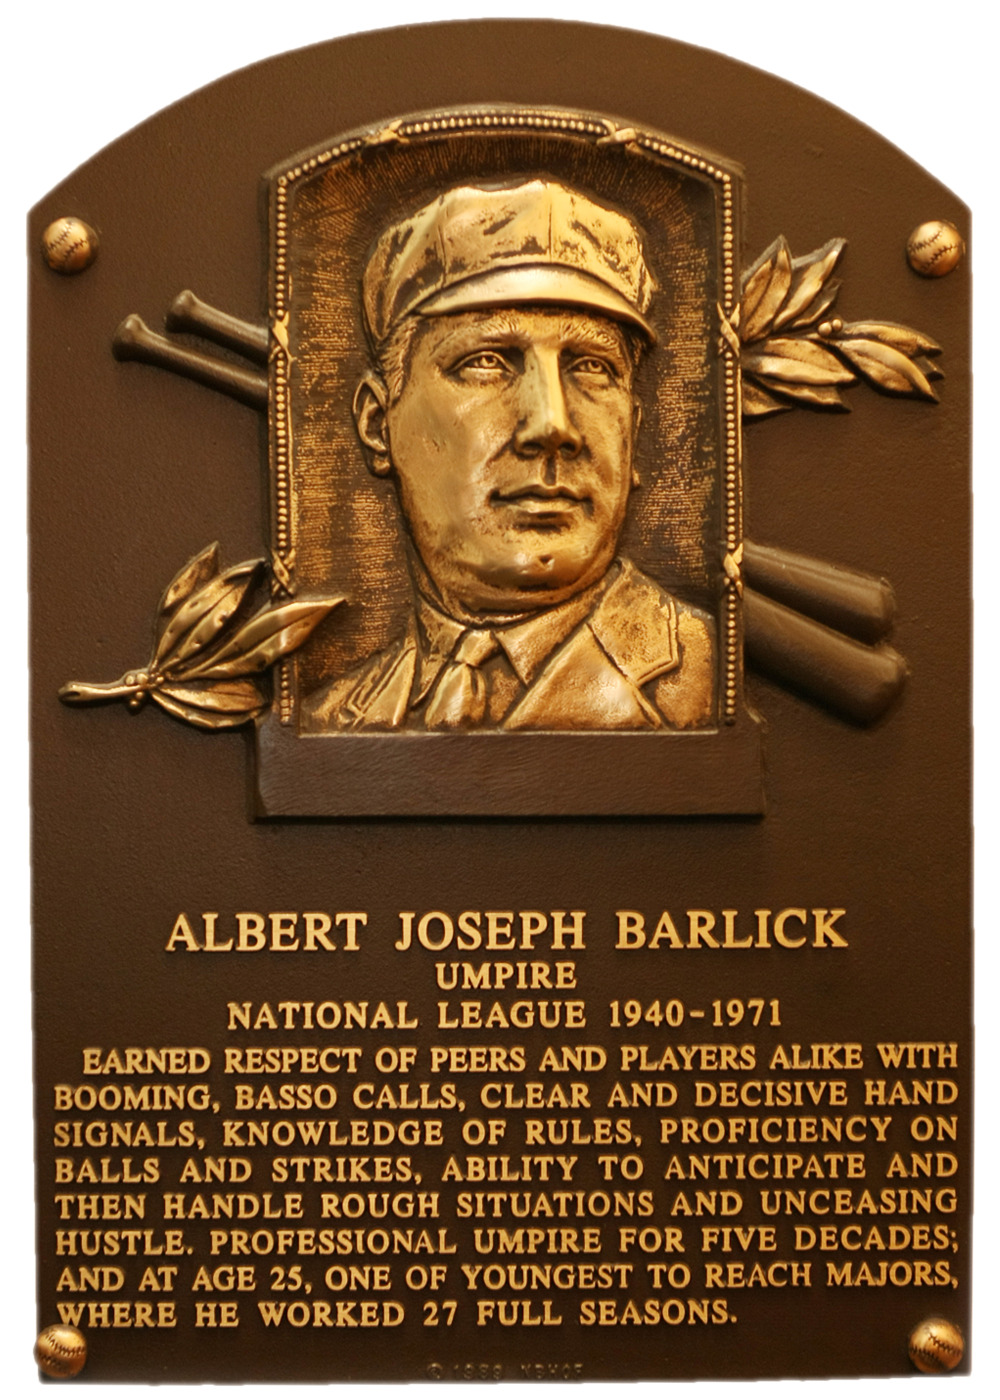 Al Barlick  Hall of Fame plaque